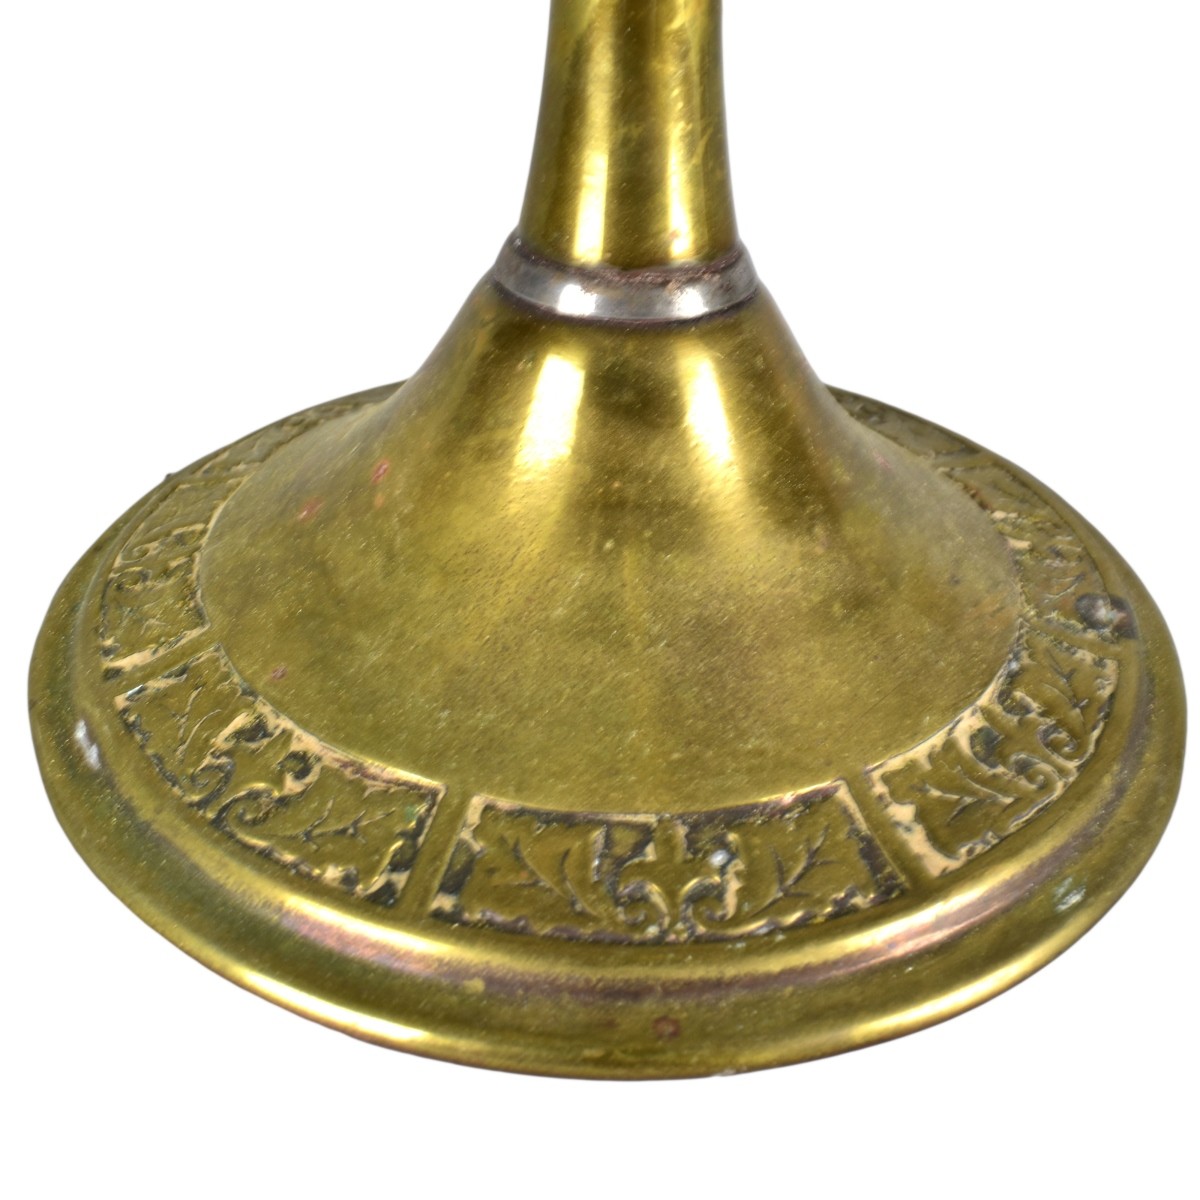 The Greist Mfg Co. Brass Lamp